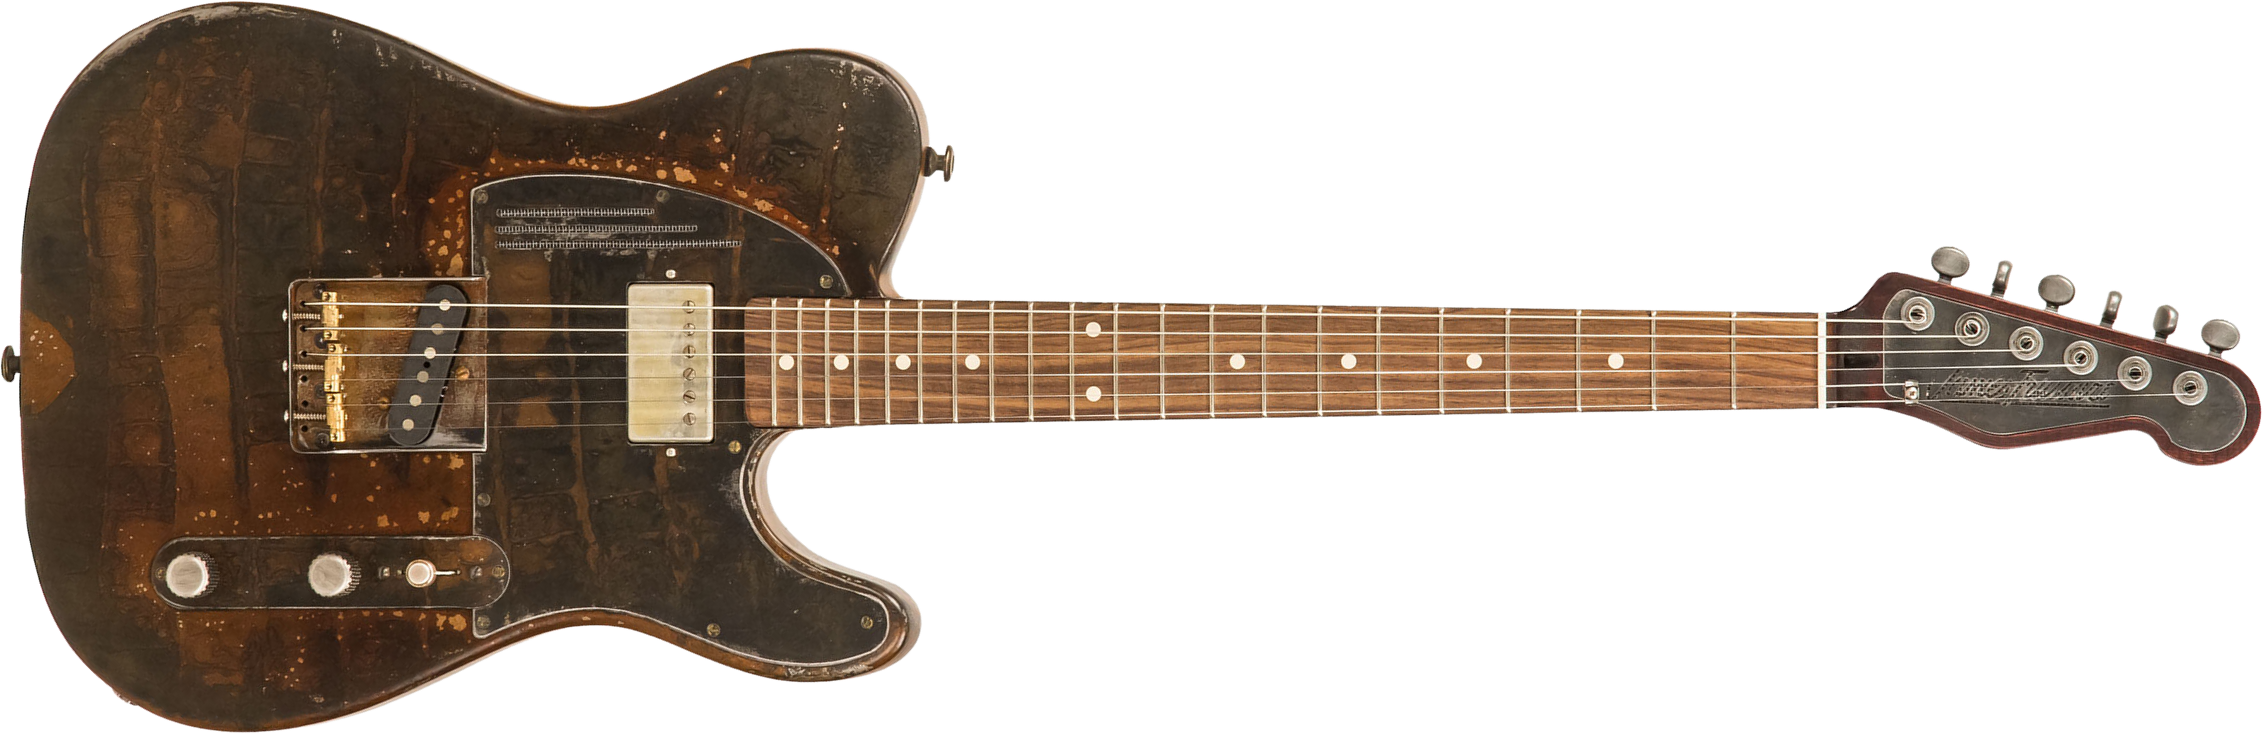 James Trussart Steelcaster Plain Back Sh Pf #20034 - Rust O Matic Gator - Semi hollow elektriche gitaar - Main picture